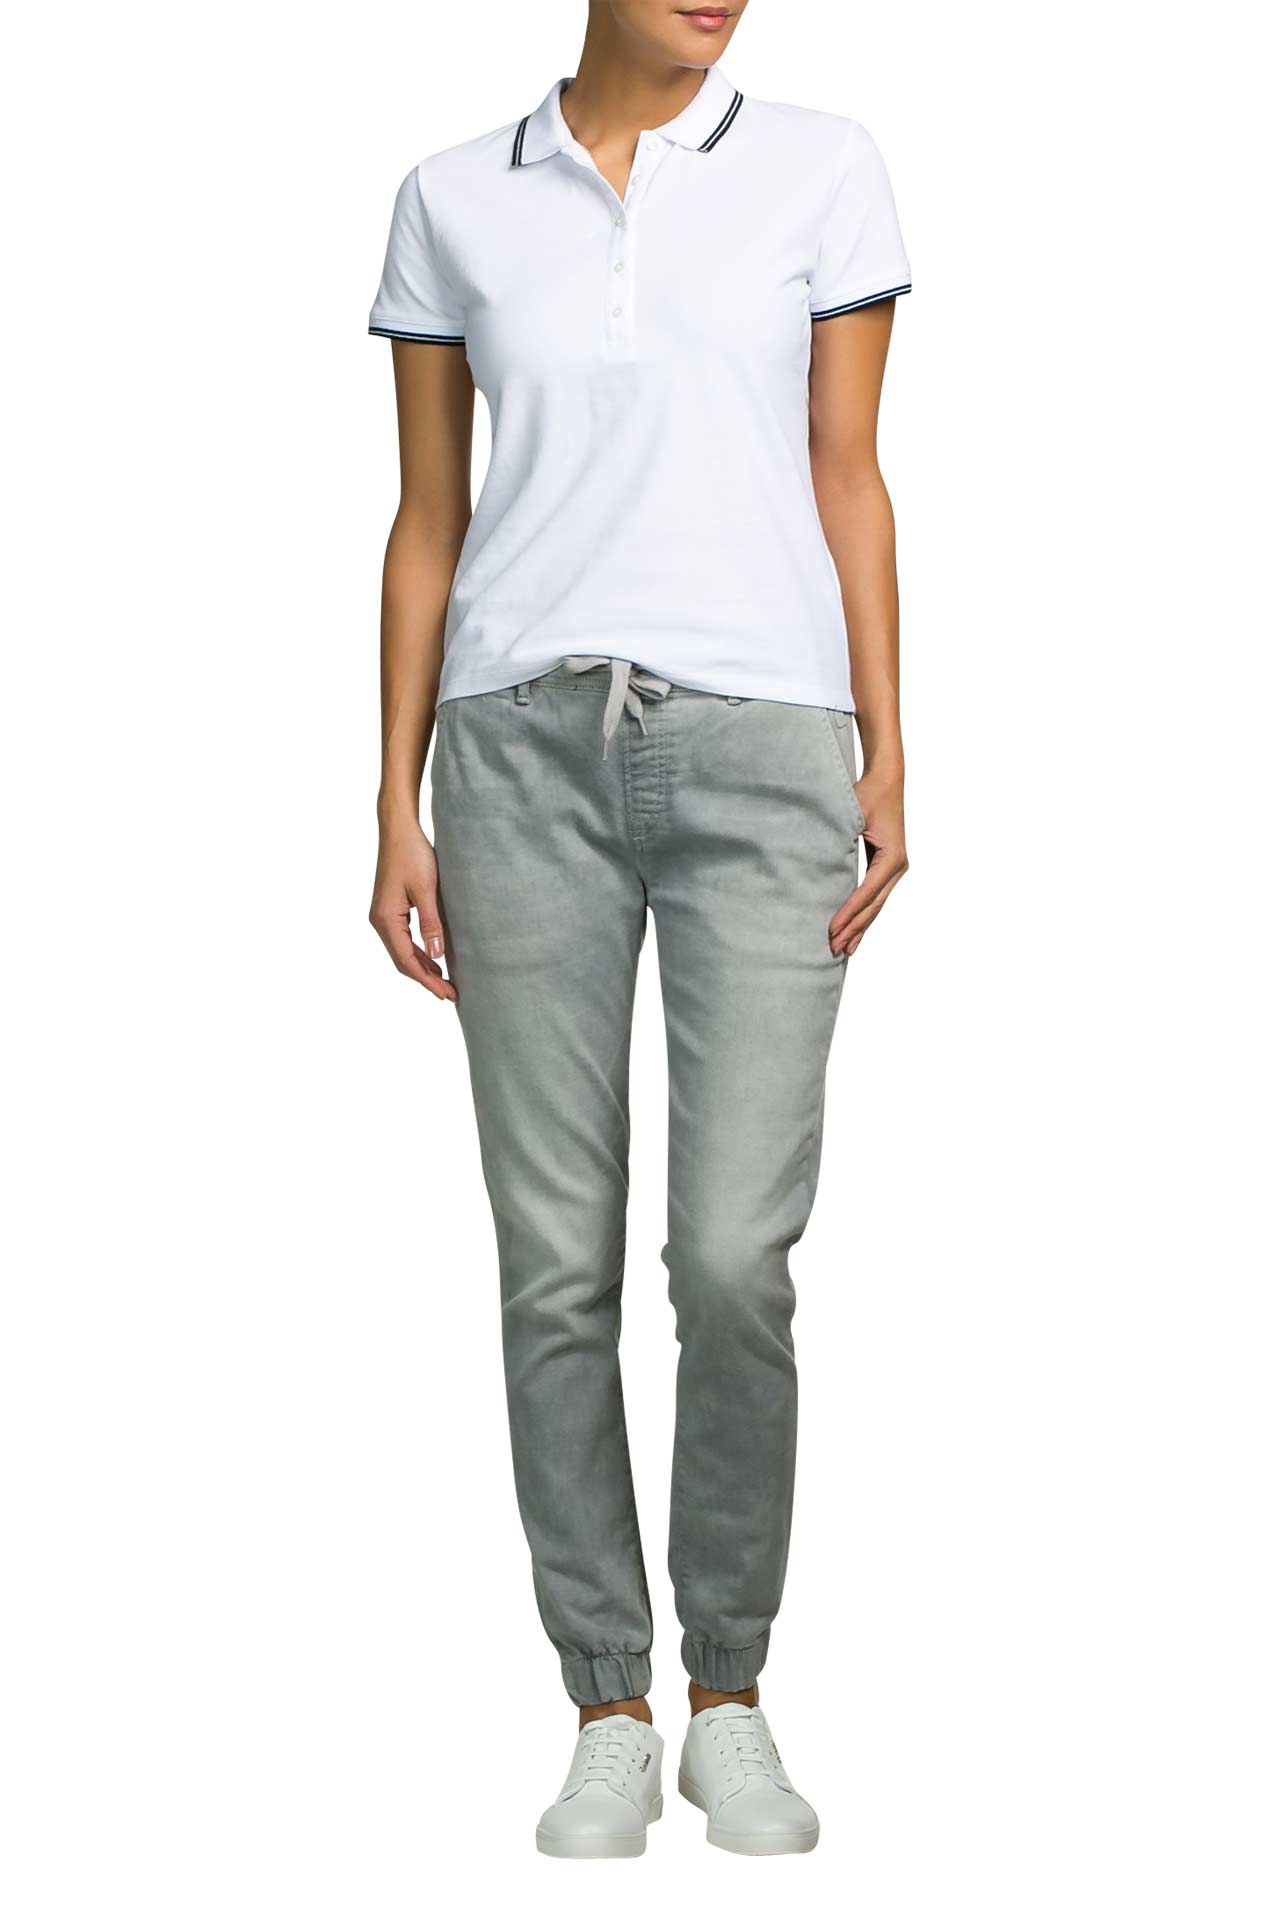 Jeans-Joggpants - PEPE JEANS » online kaufen | OUTLETCITY.COM